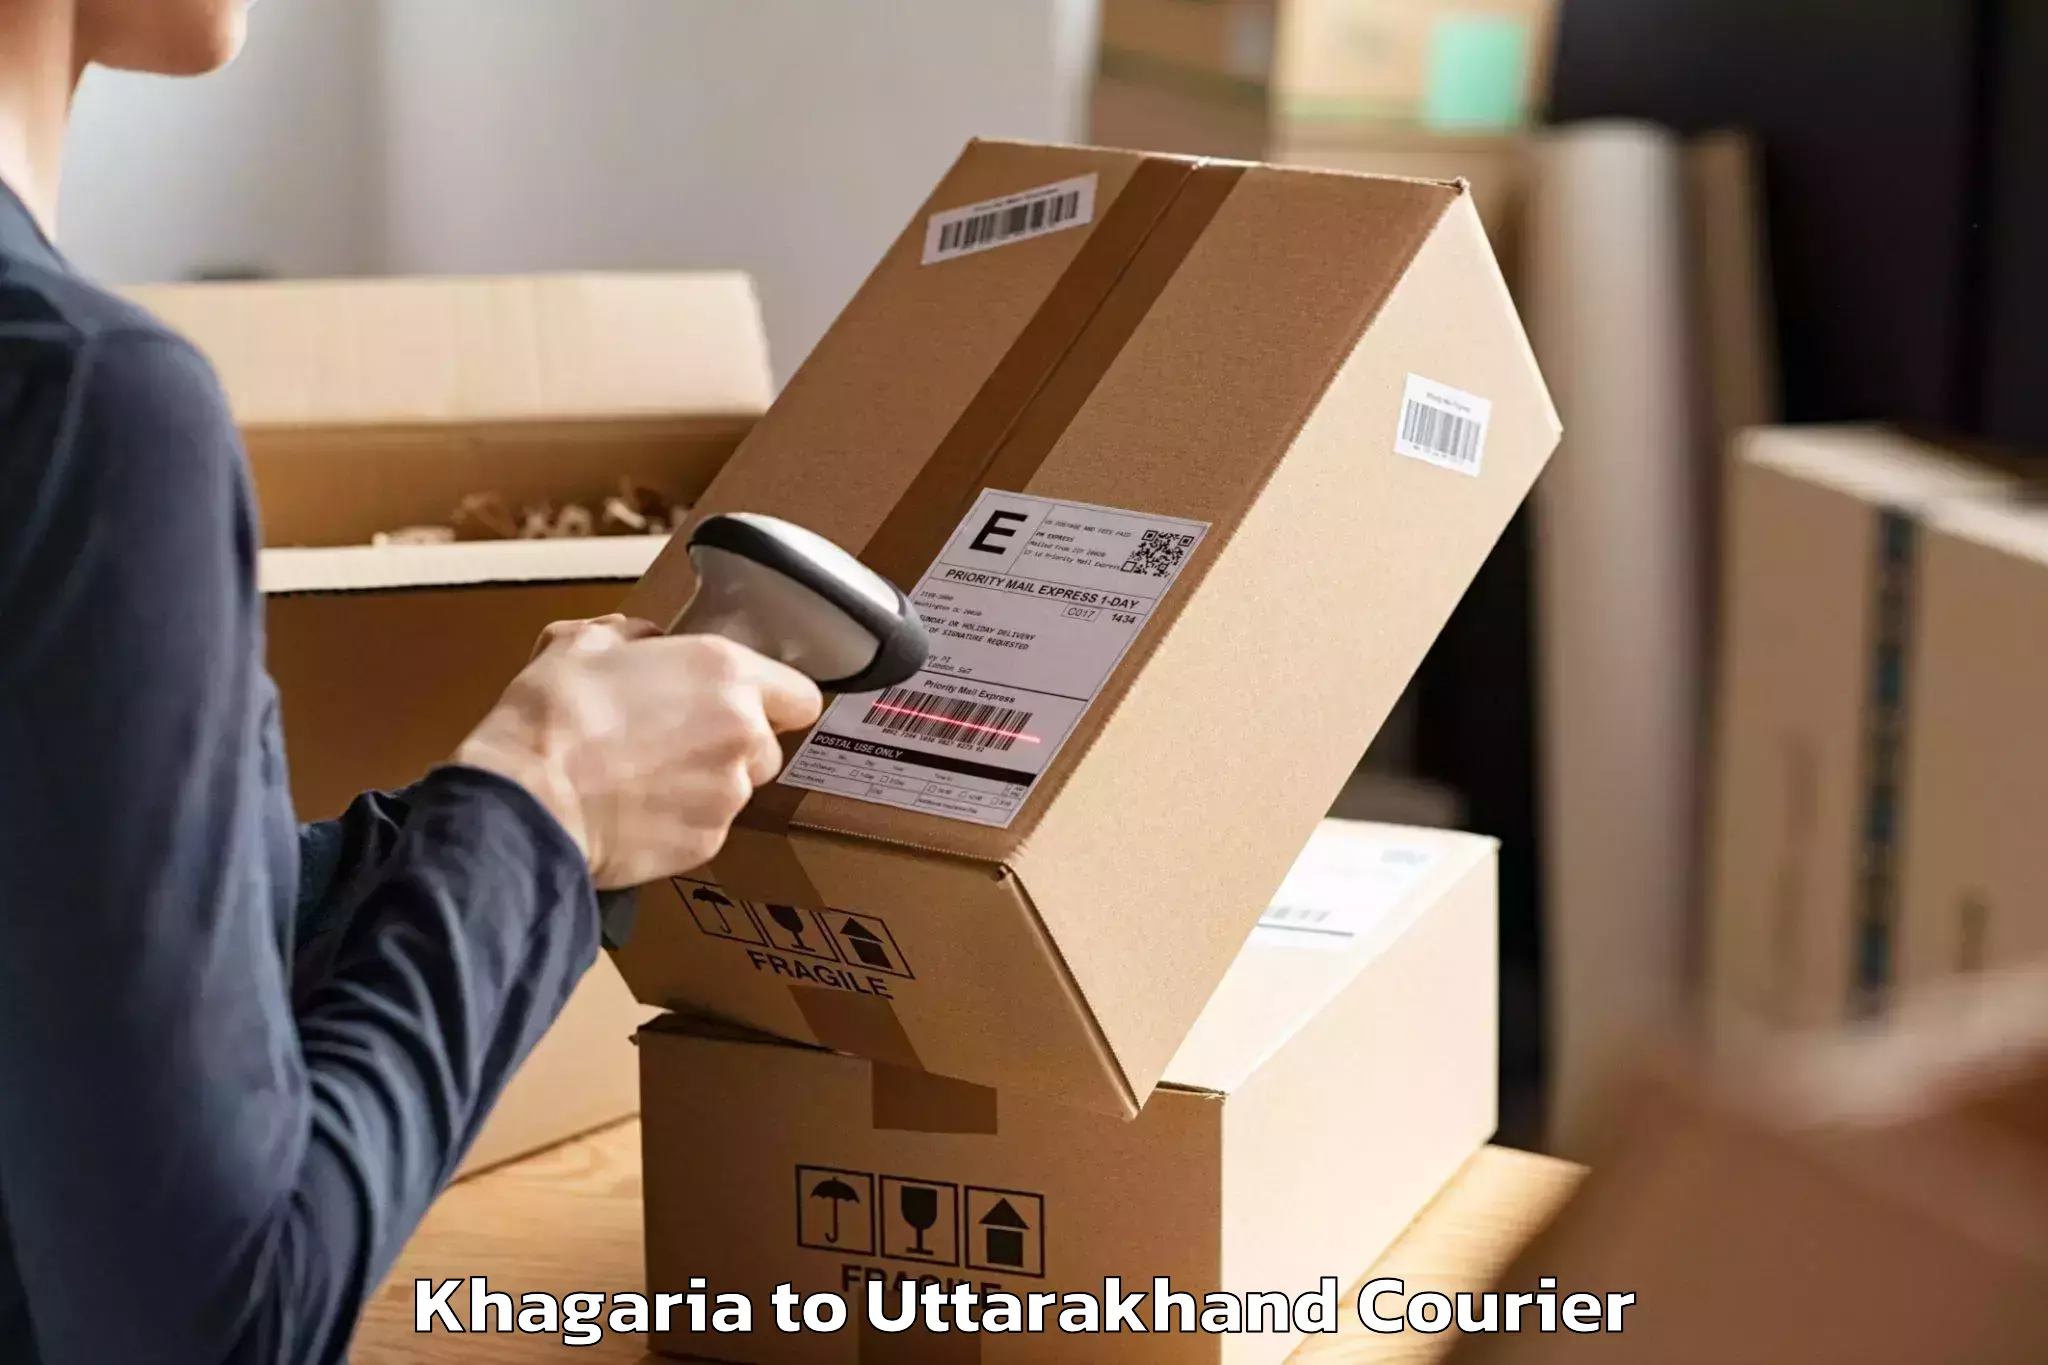 Professional moving company Khagaria to IIT Roorkee